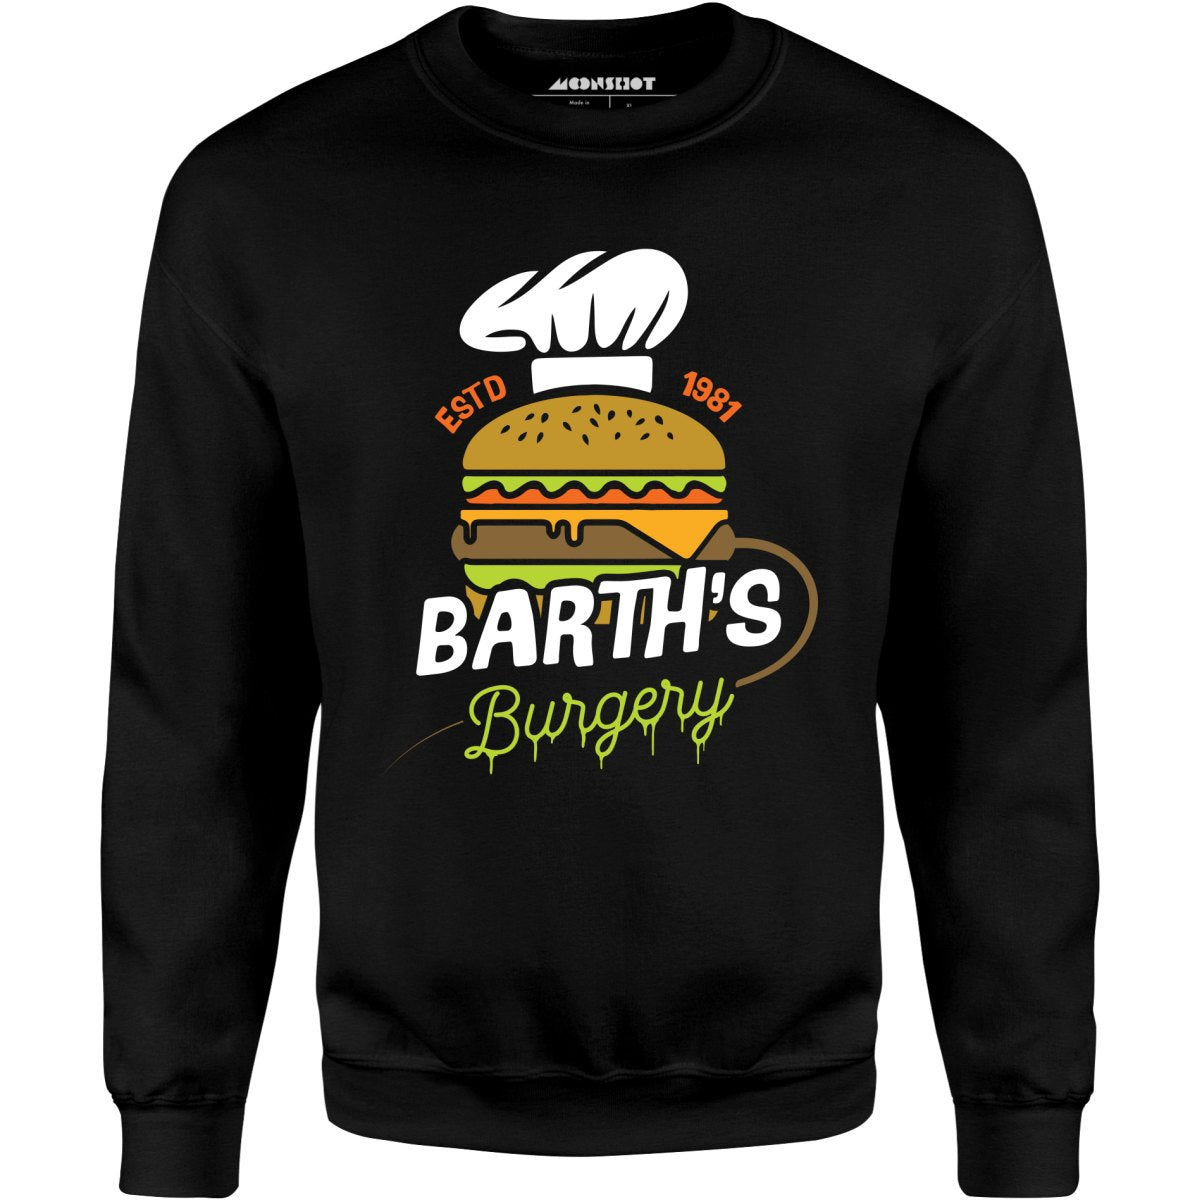 Barth's Burgery - Unisex Sweatshirt